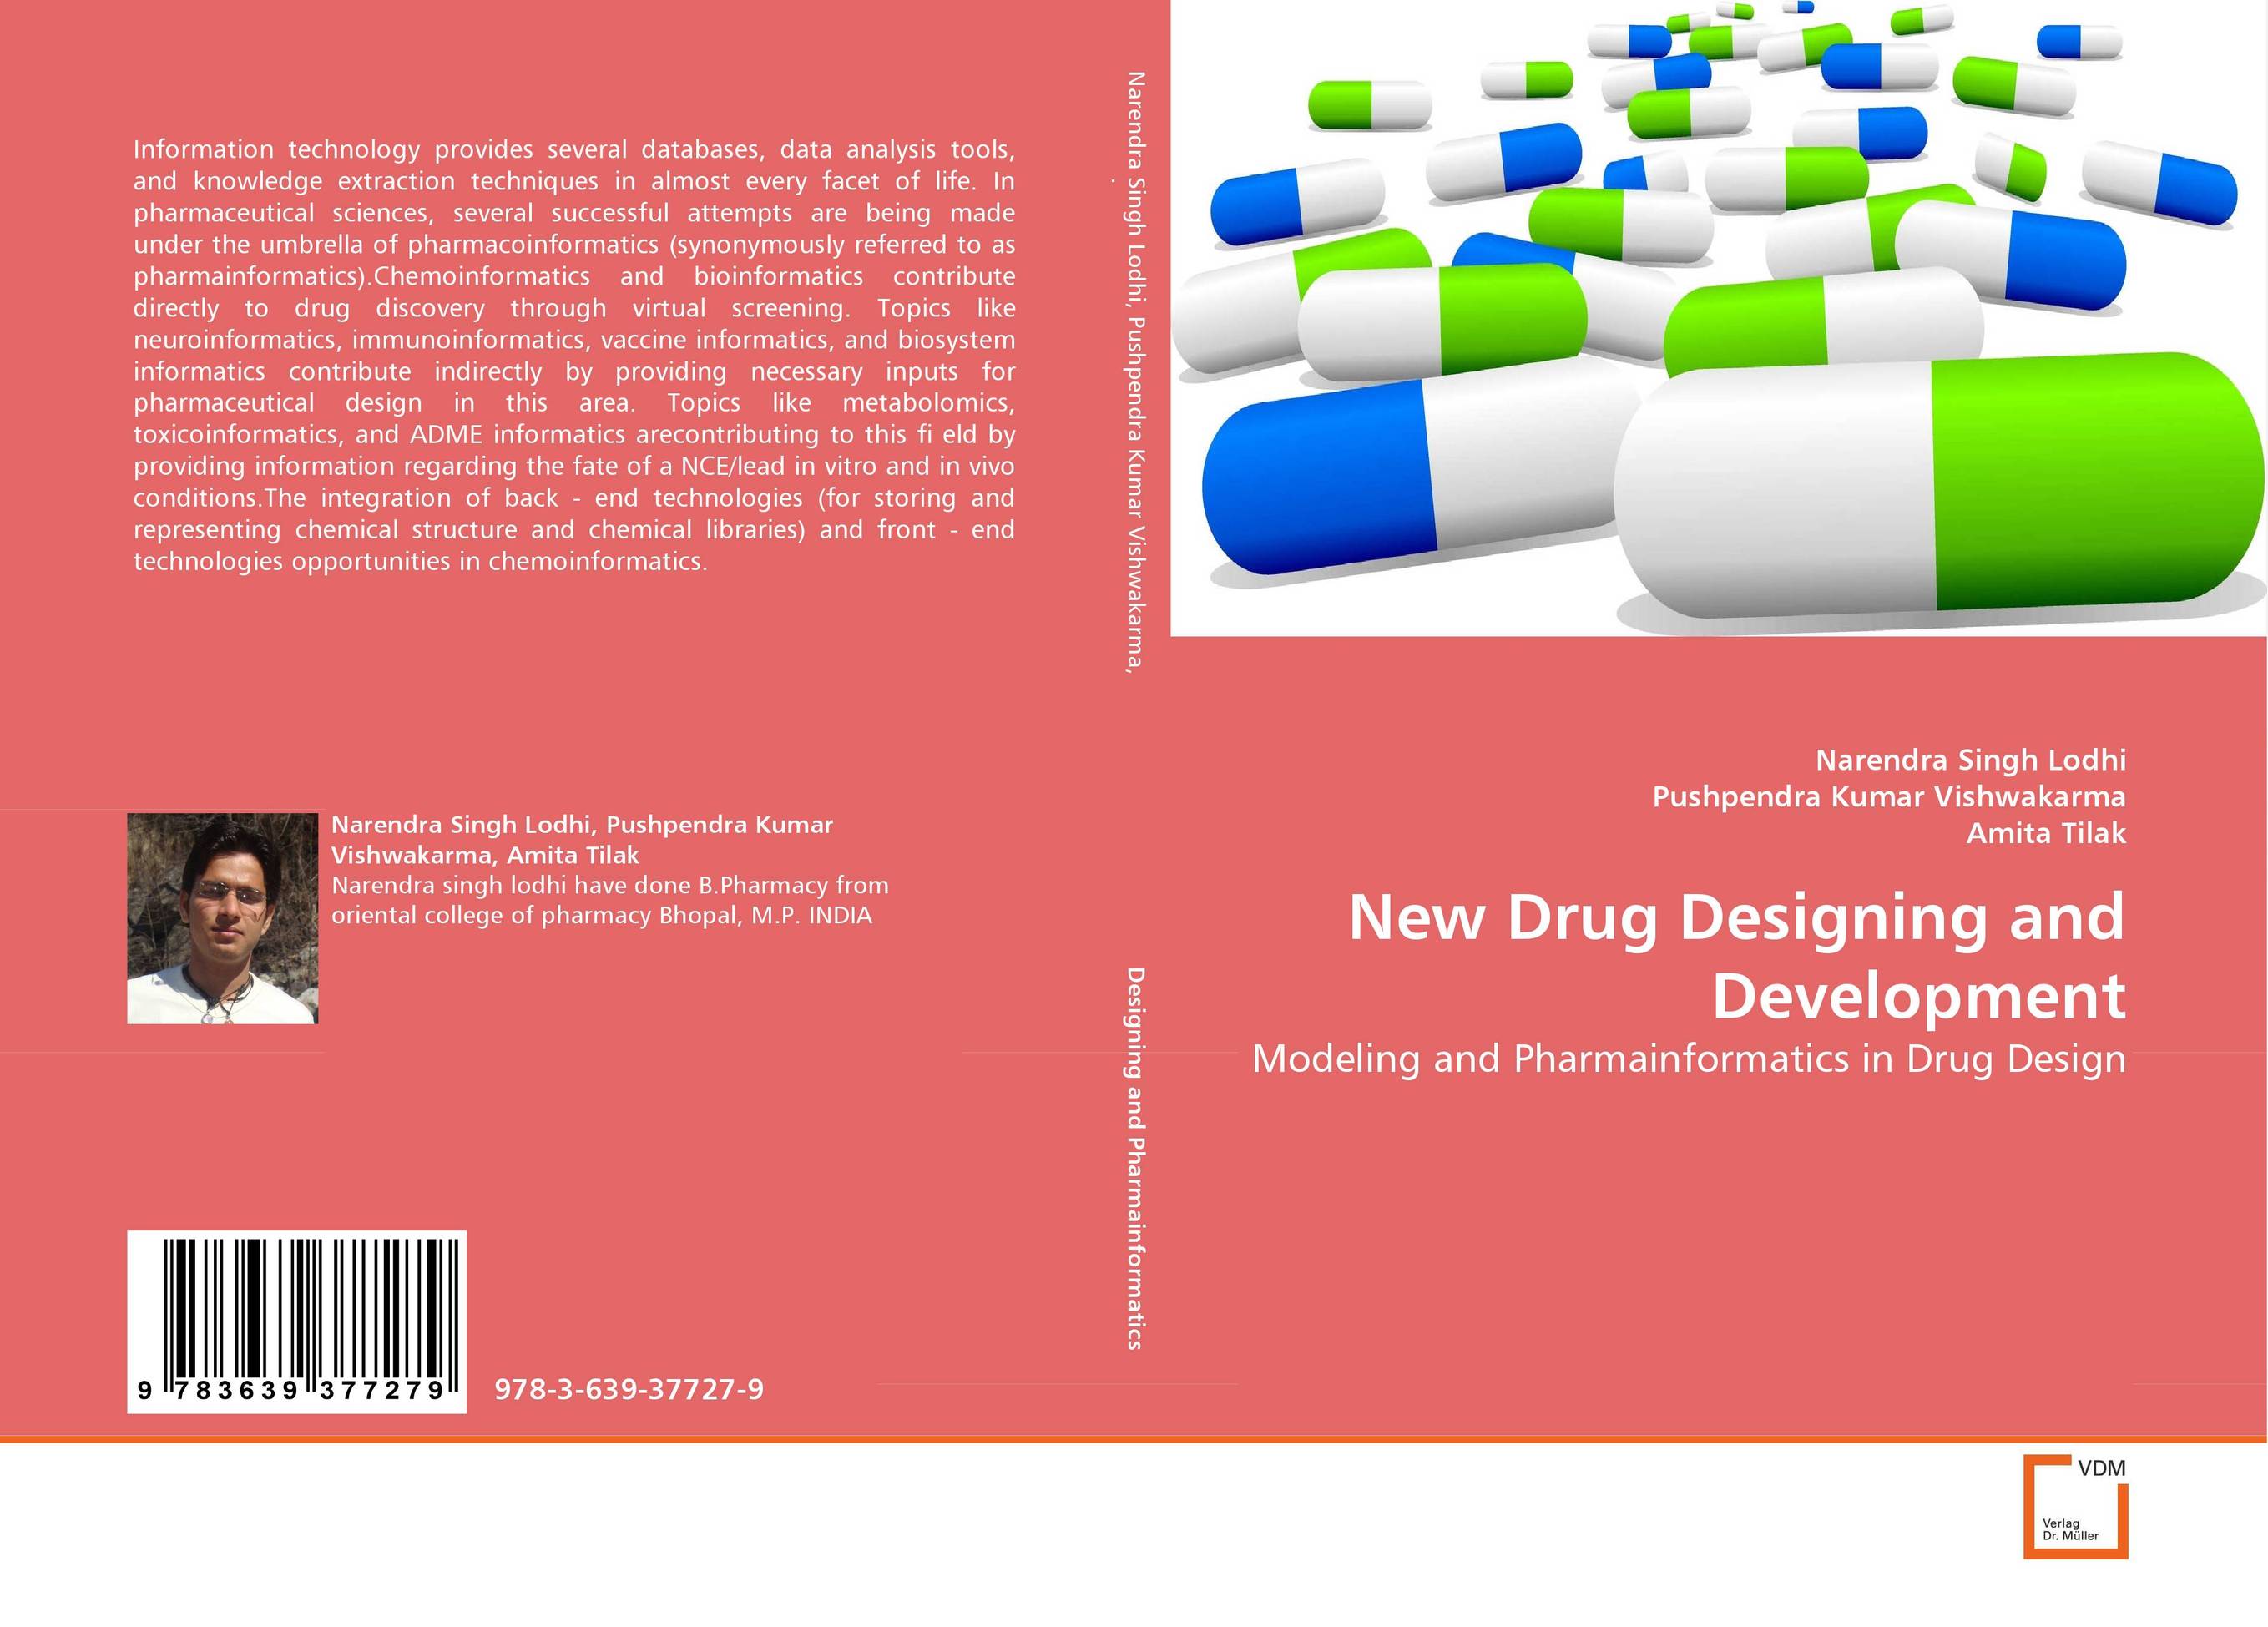 New Drug Designing and Development